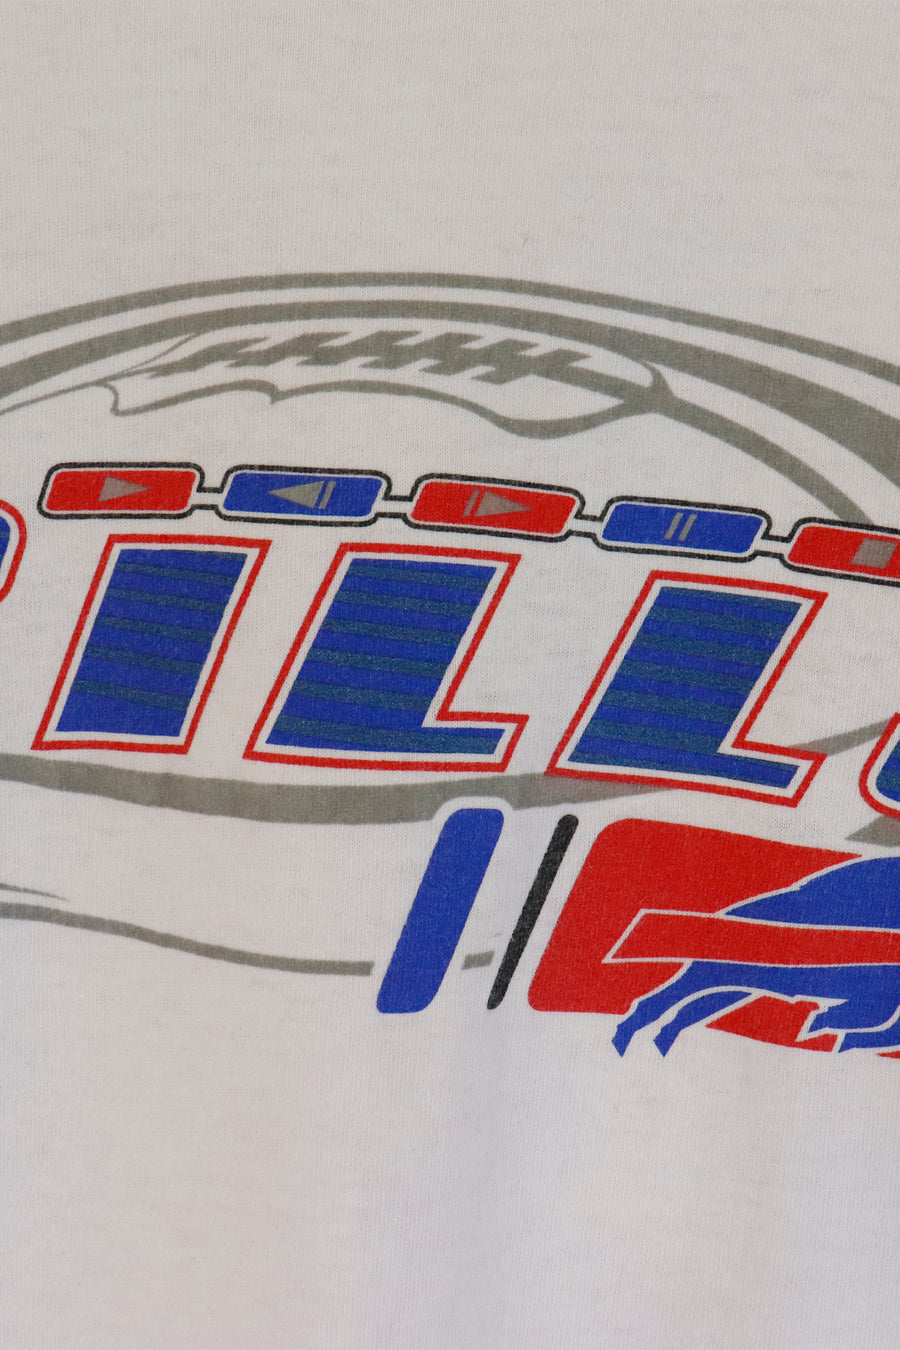 Vintage NFL Buffalo Bills Adidas T Shirt Sz XL